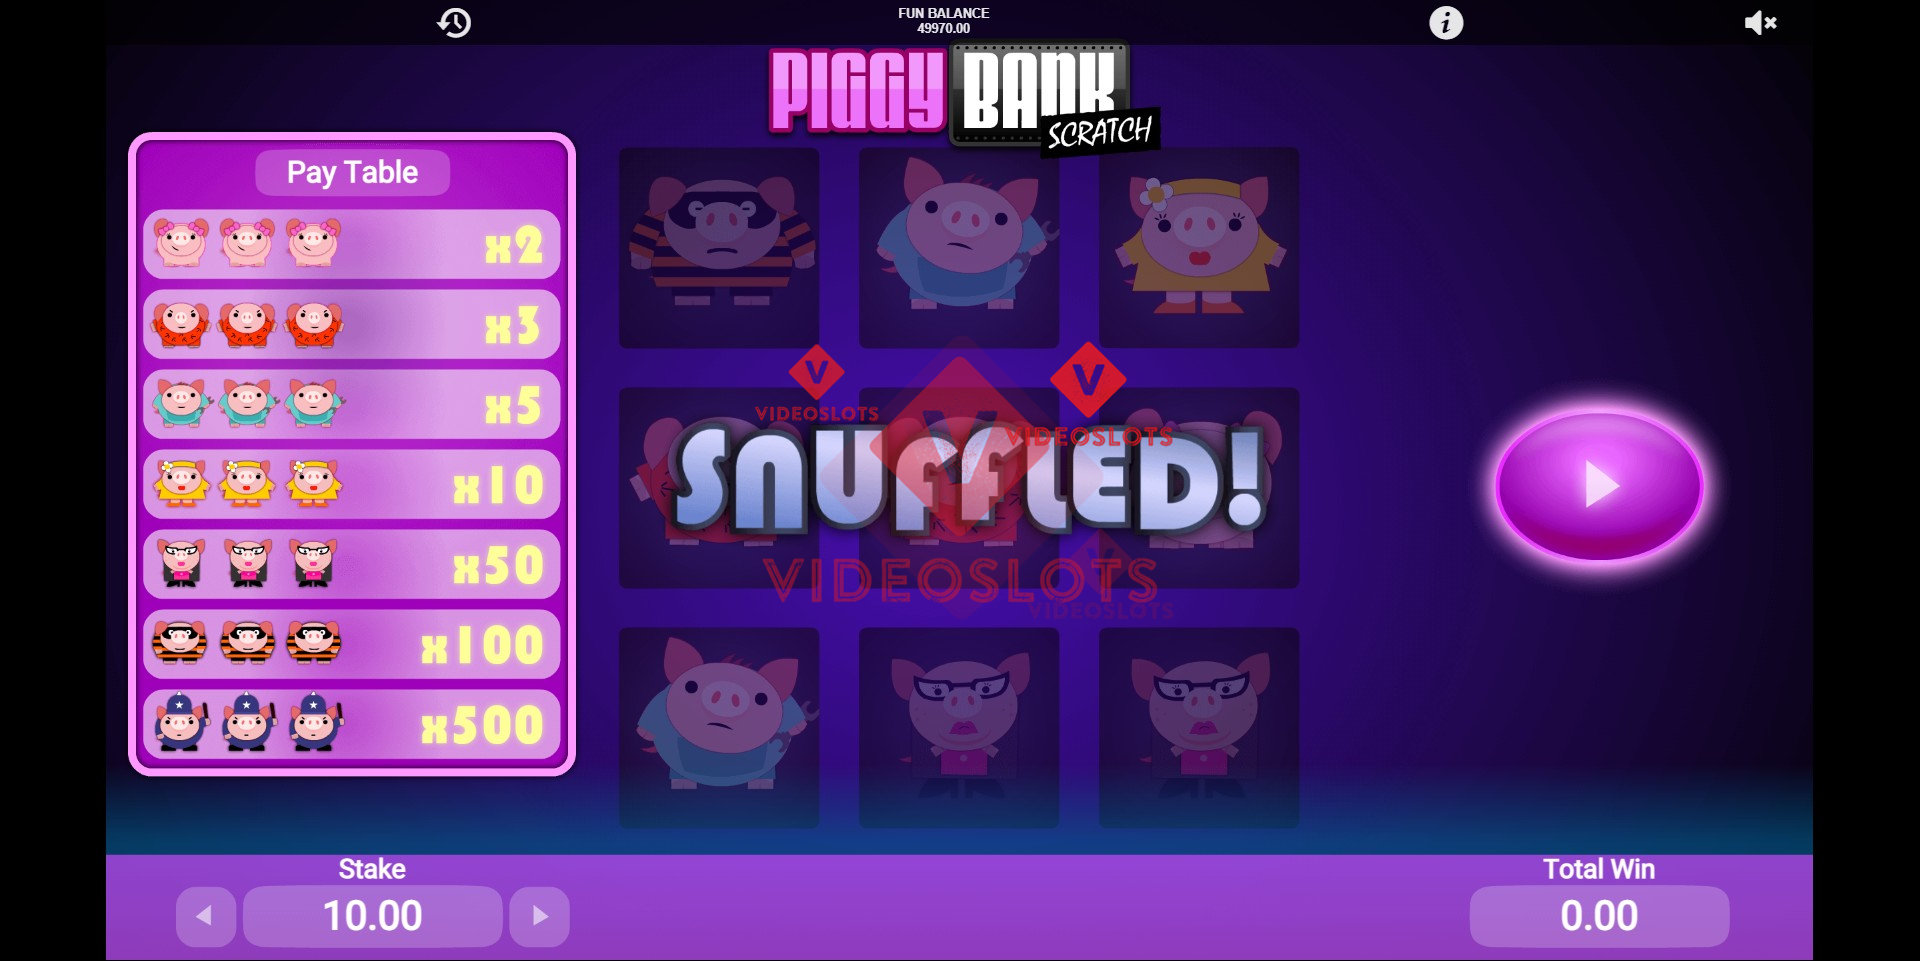 Piggy Bank slot base game by 1X2 Gaming